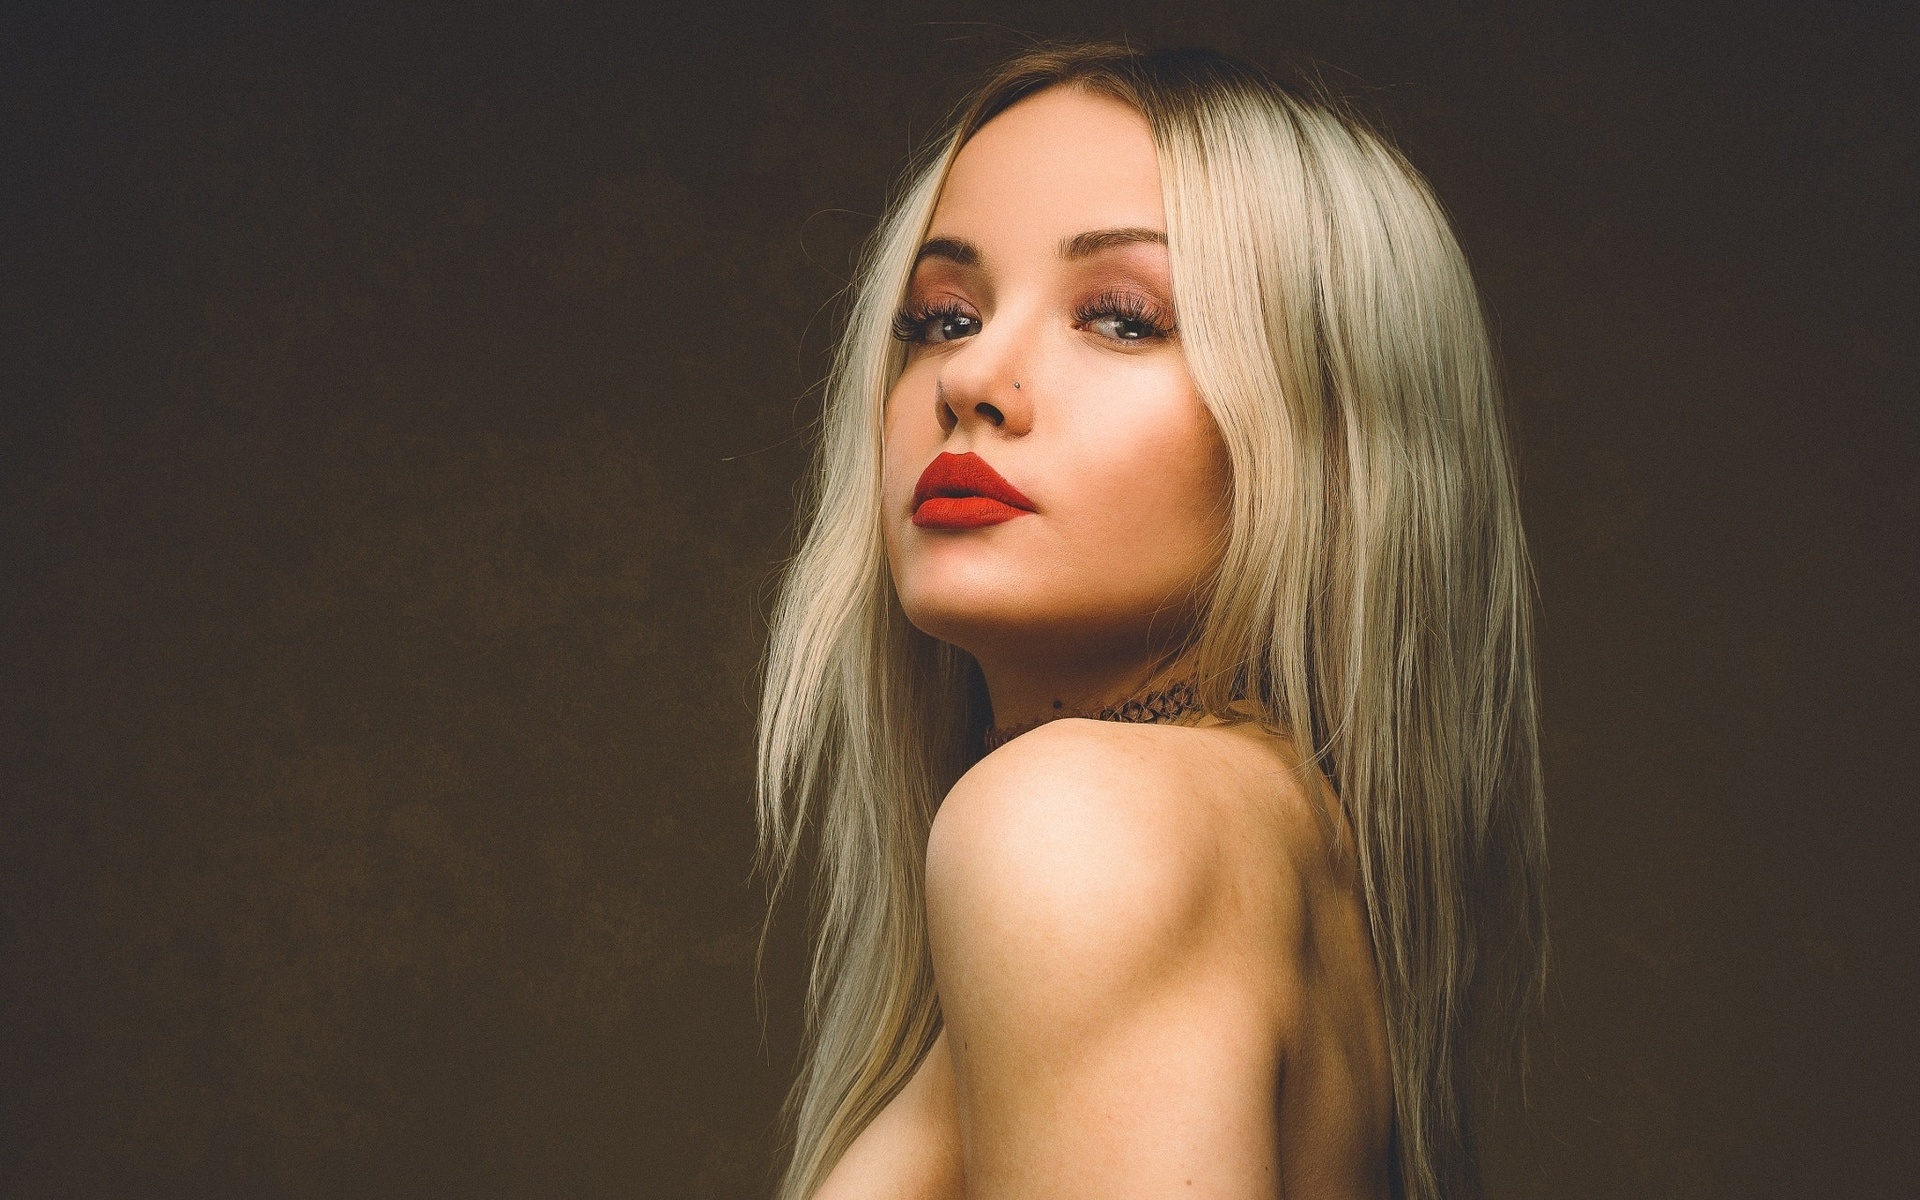 alicja sedzielewska, women, blonde, portrait, red lipstick, simple background, choker, pierced nose, face